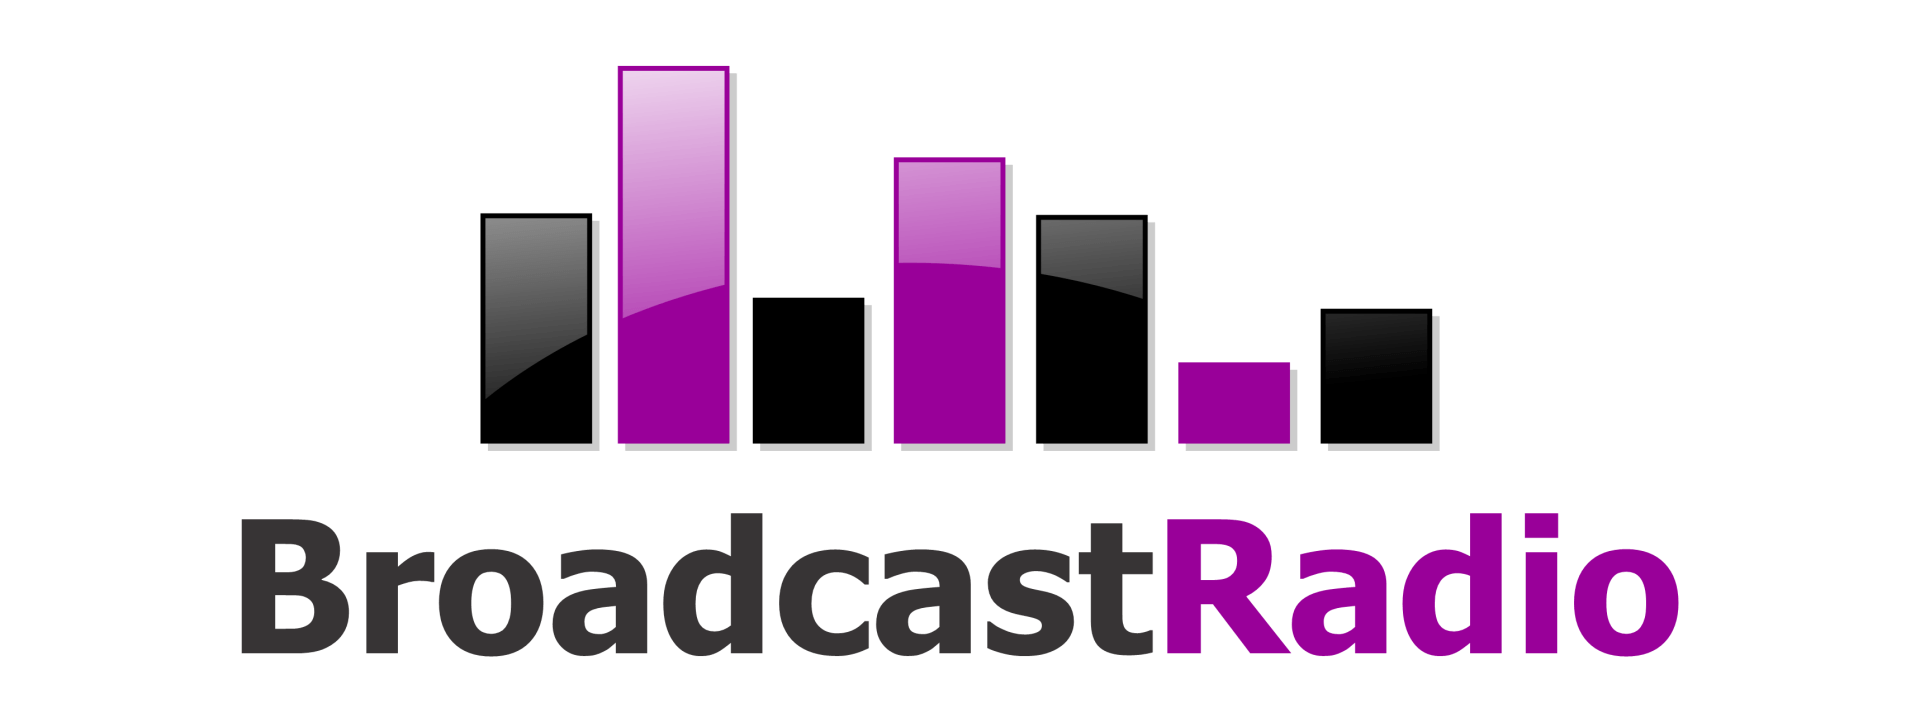 A purple and black logo for broadcast radio